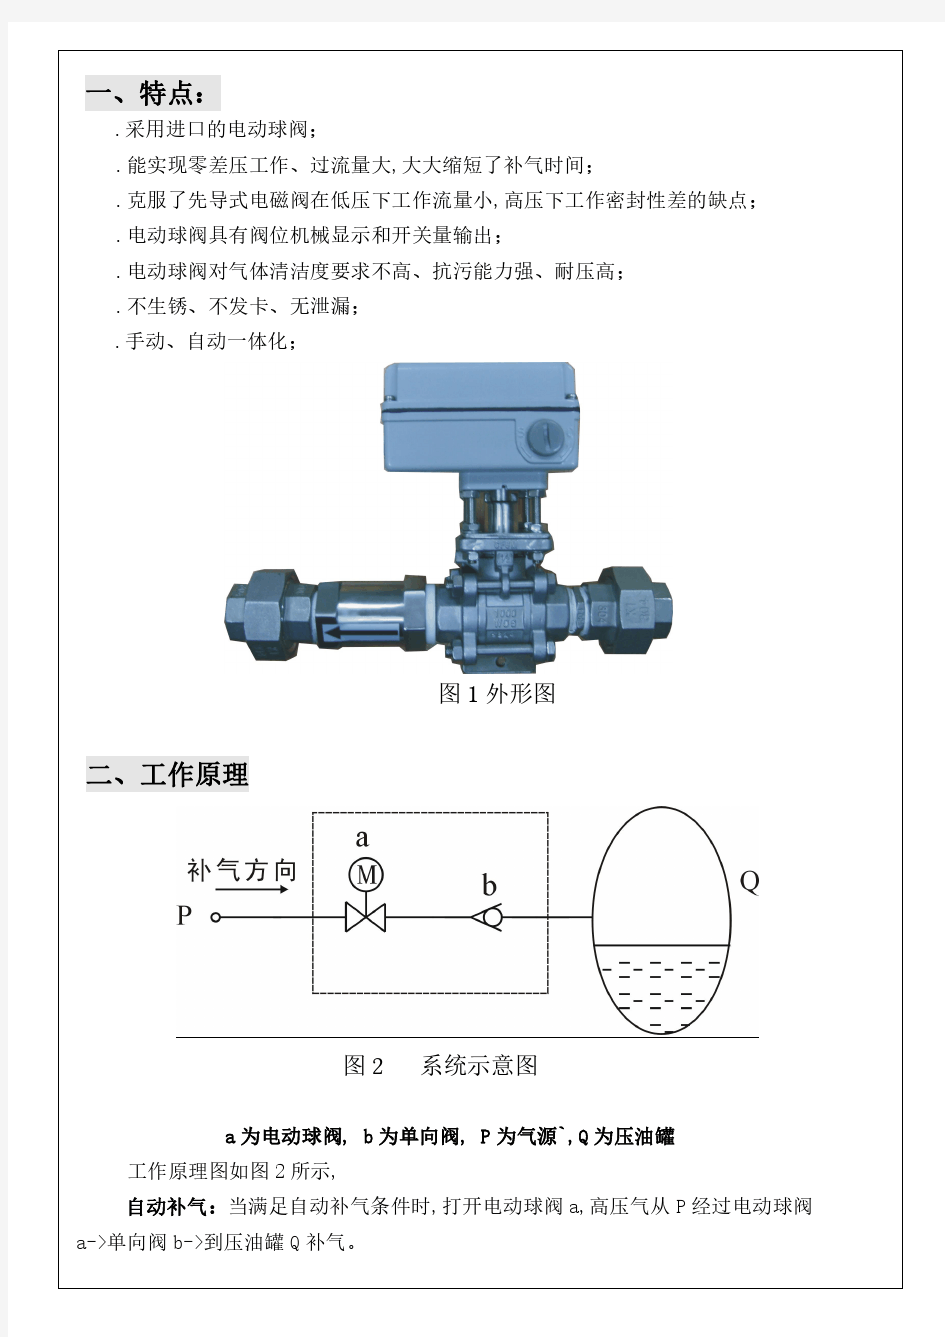 B301-1自动补气装置(说明书)